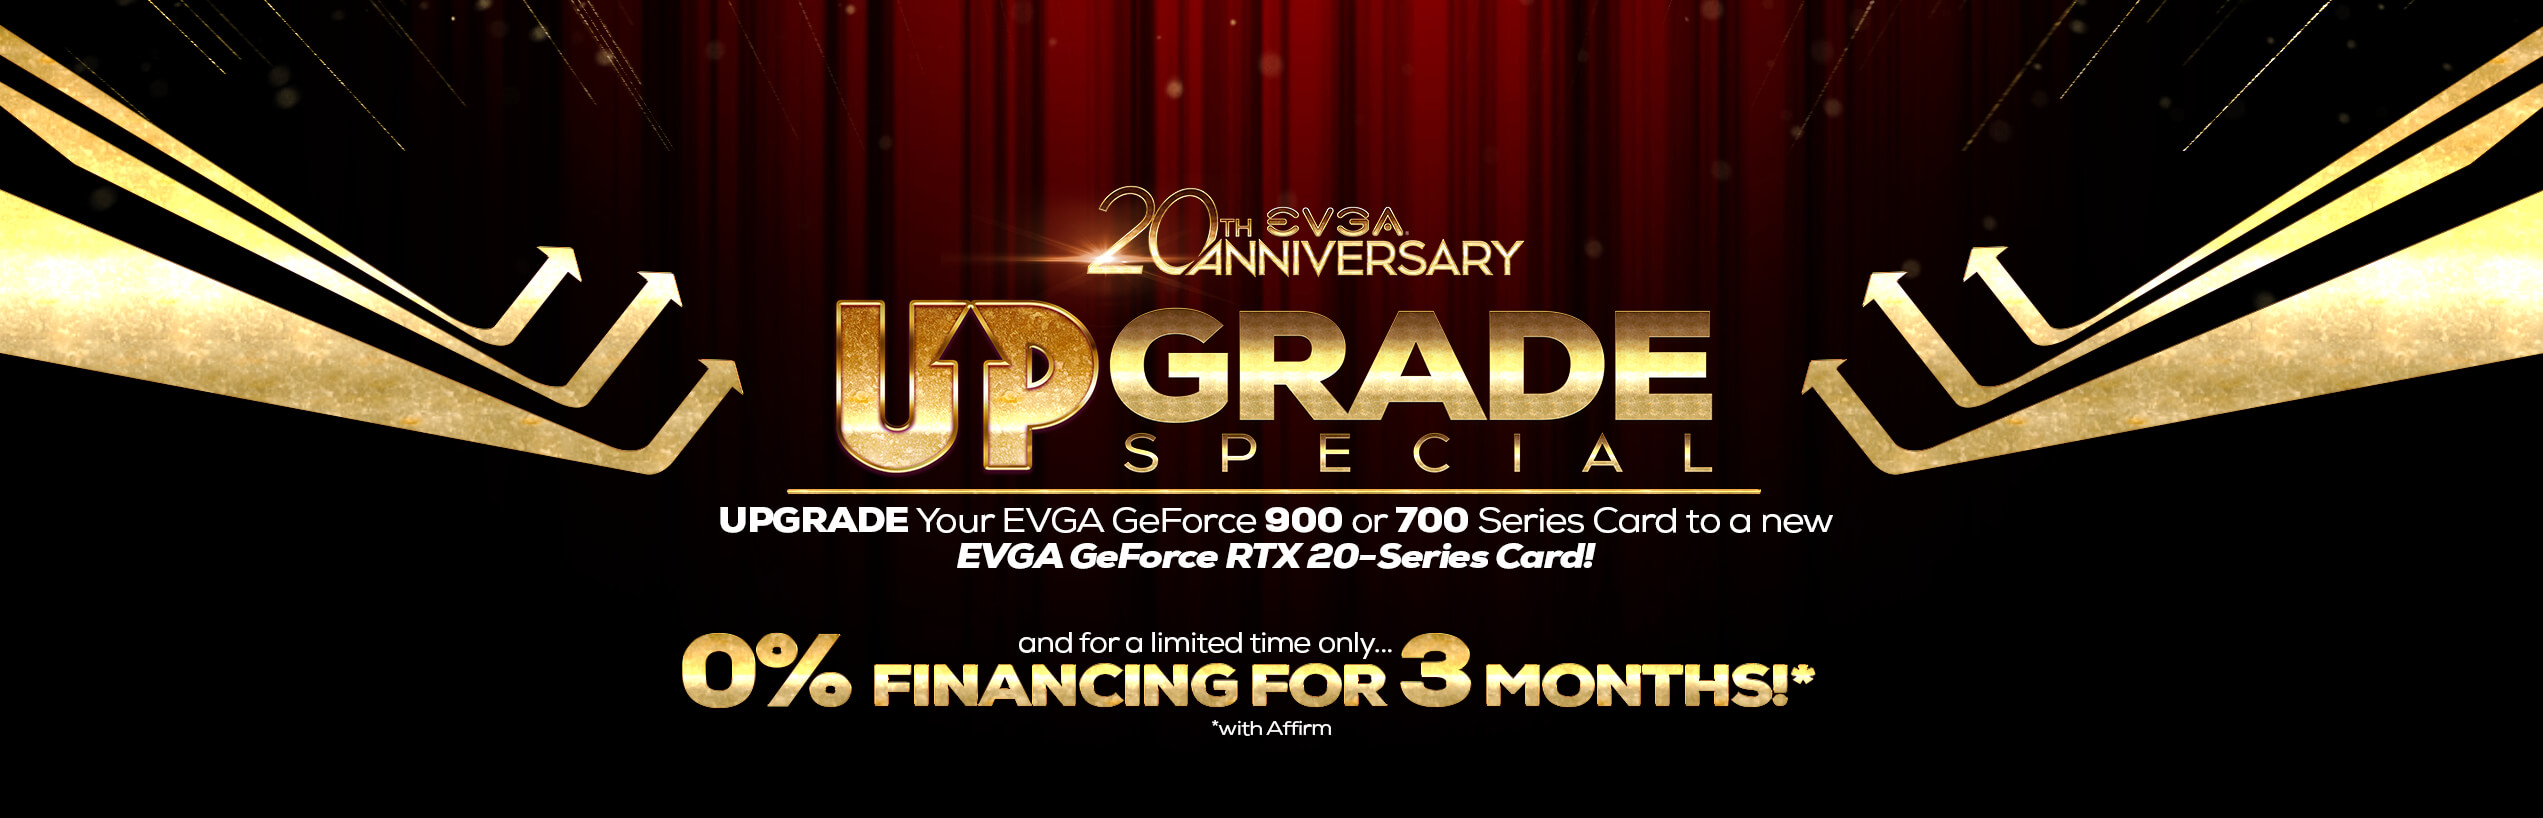 EVGA GeForce 900 or 700 Series Card Upgrade Special!